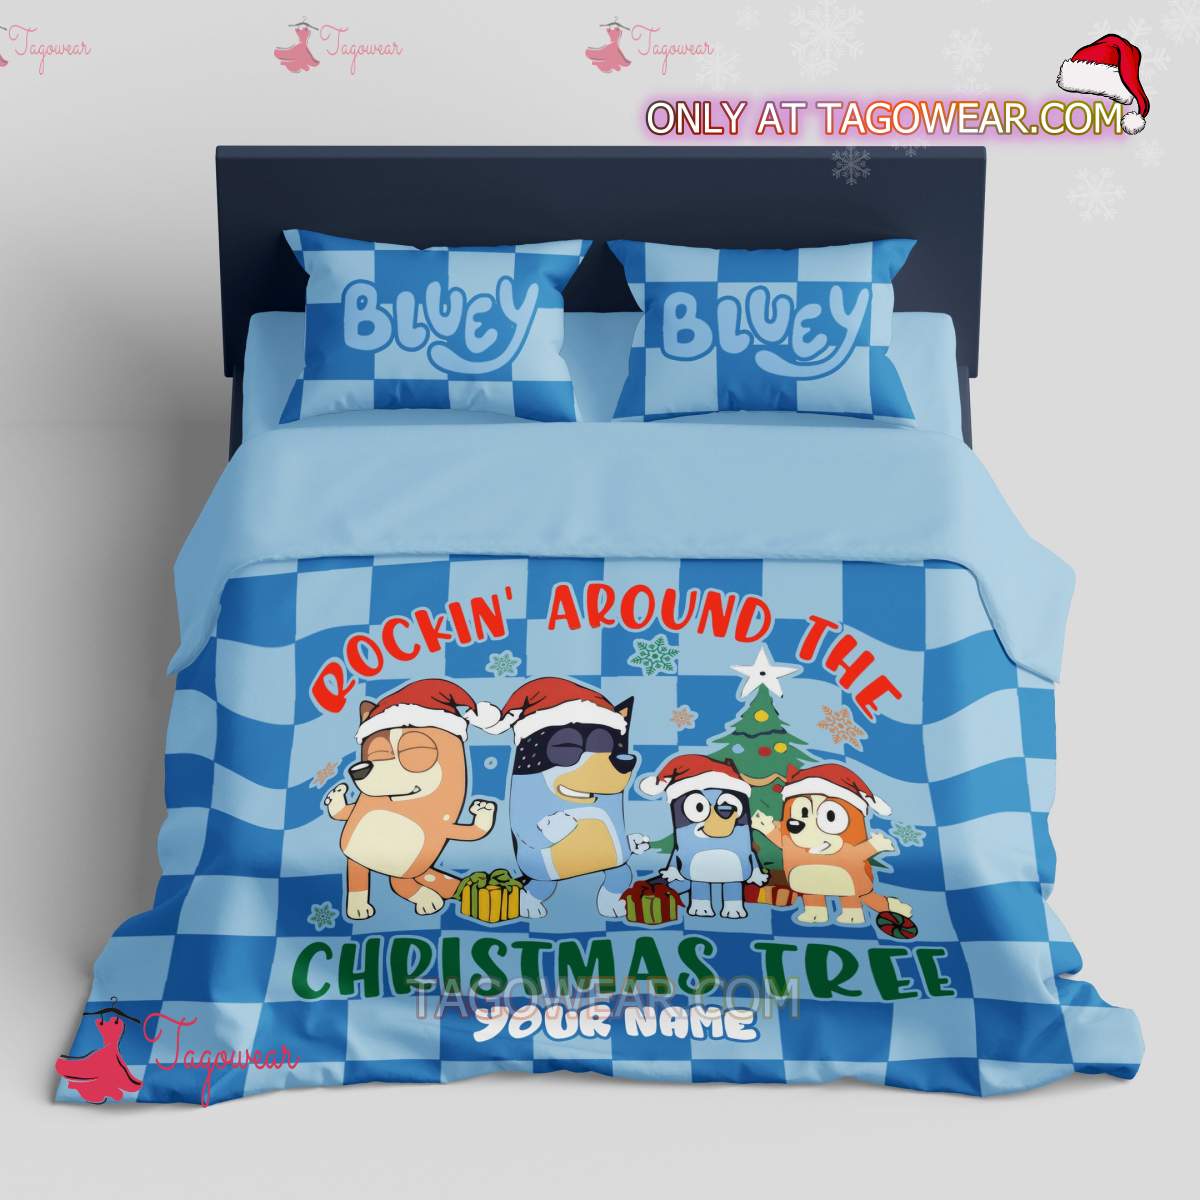 Bluey Rockin' Around The Christmas Tree Personalized Bedding Set